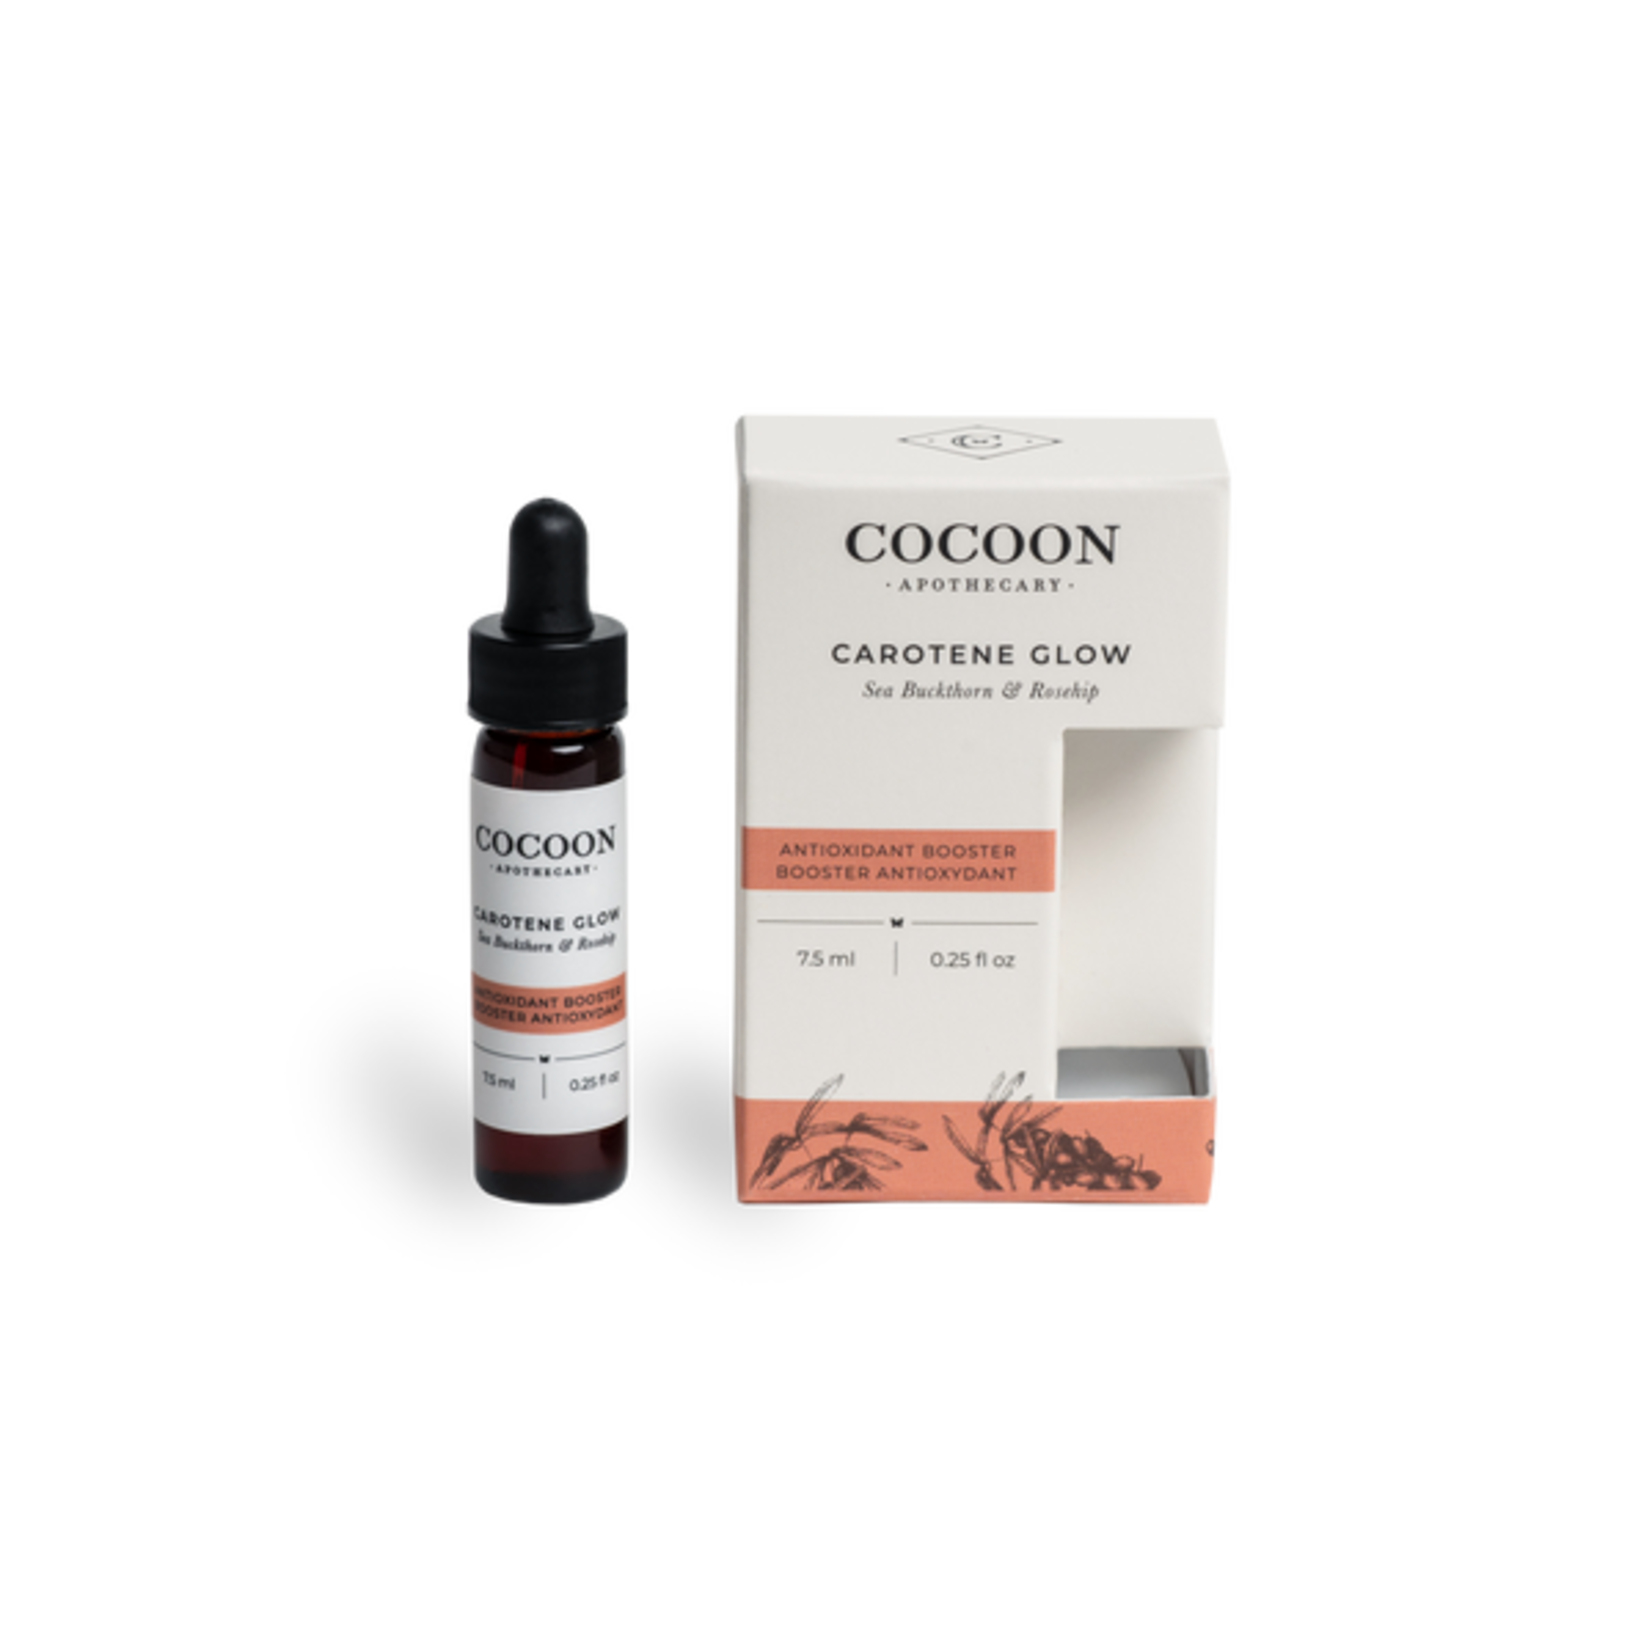 Cocoon Carotene Glow Antioxidant Boost